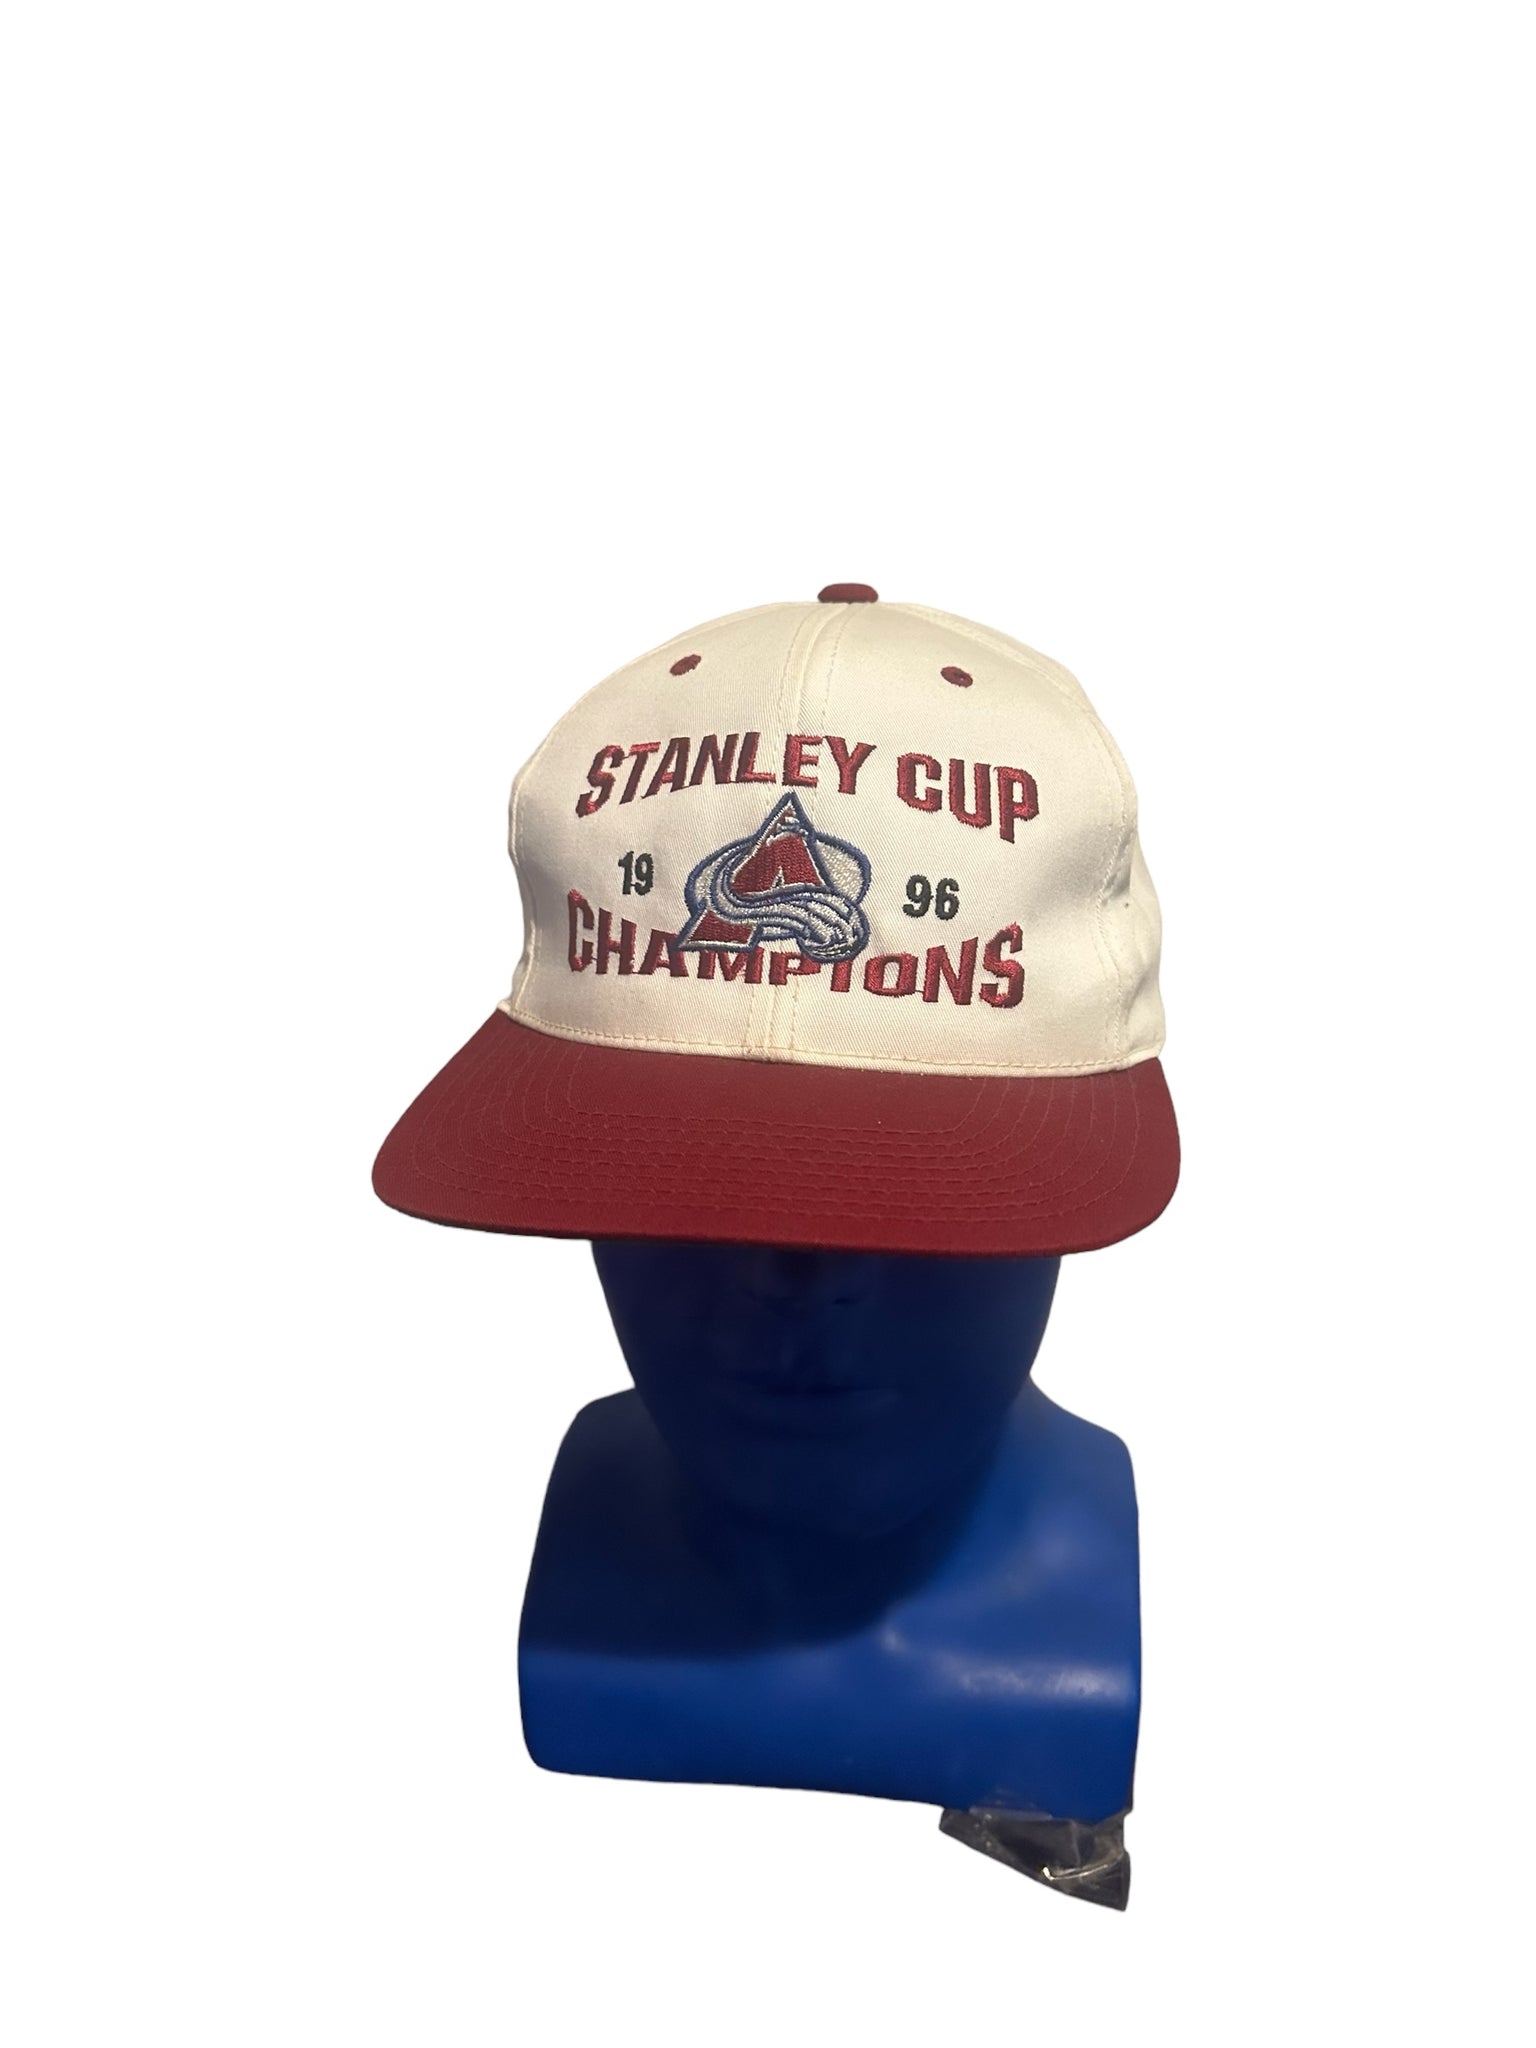 vintage logo 7 nhl stanley cup Champions 1996 Colorado Avalanche snapback hat